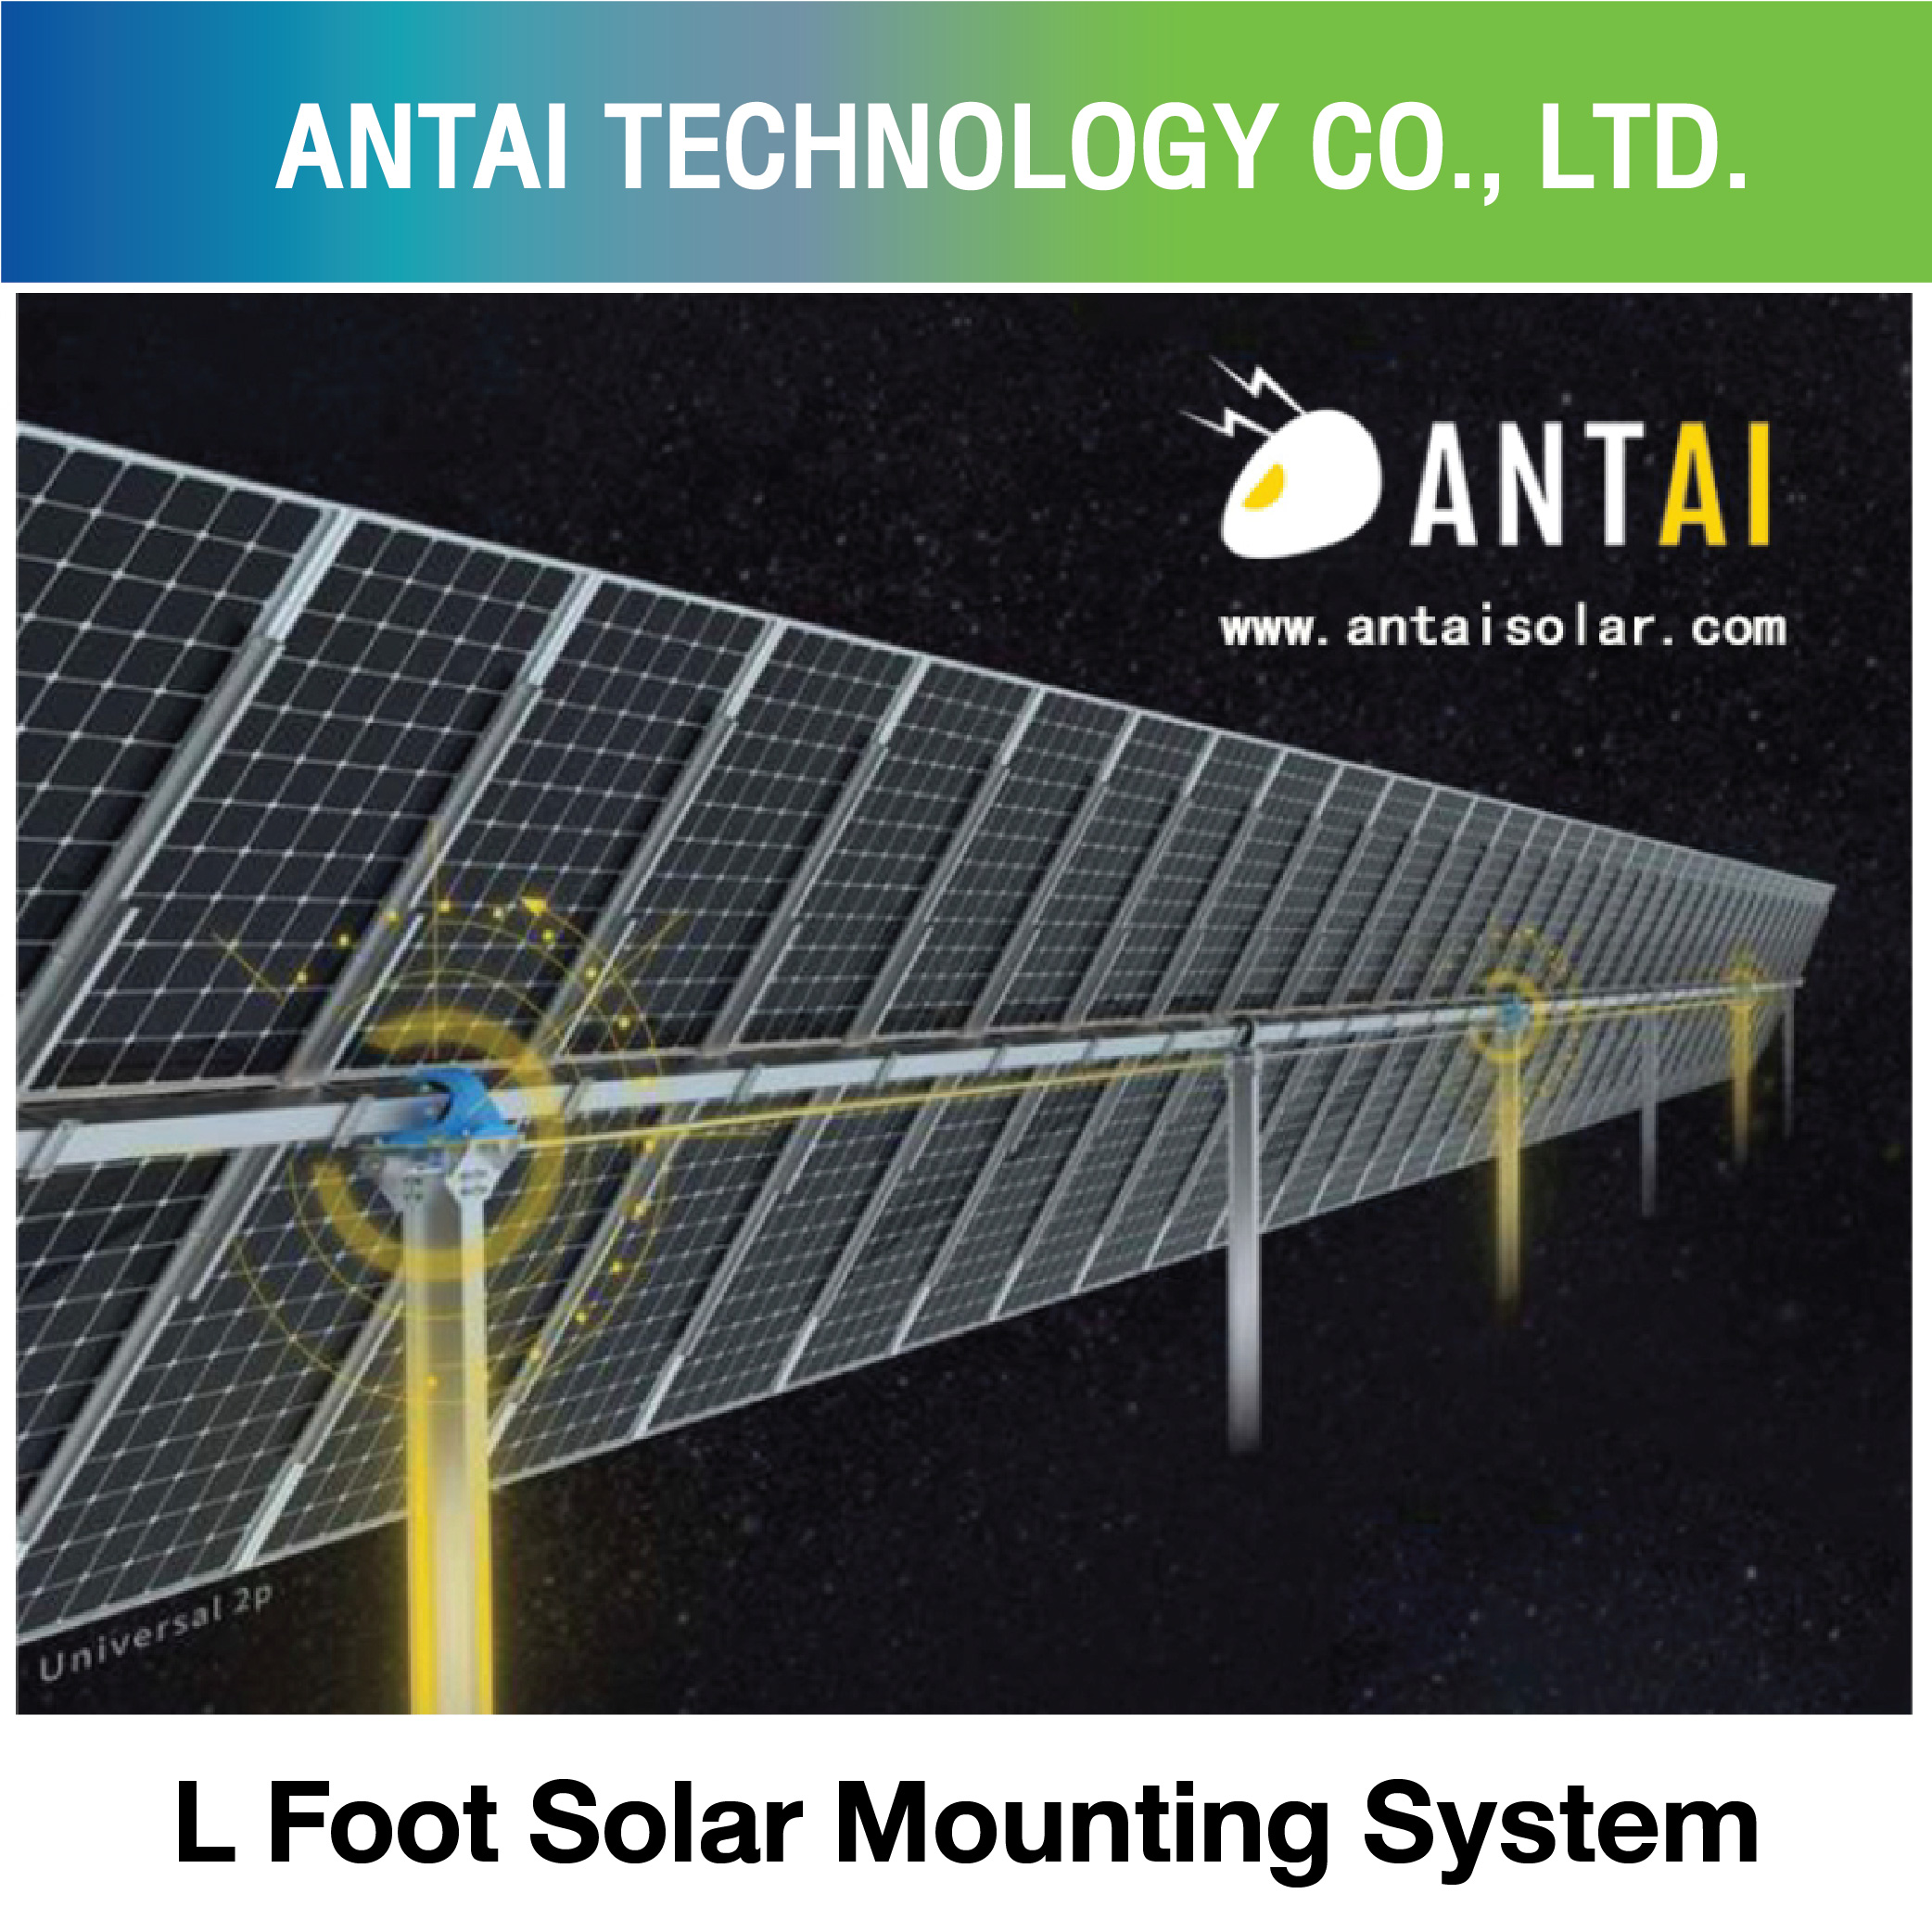 Antai Technology Co., Ltd.